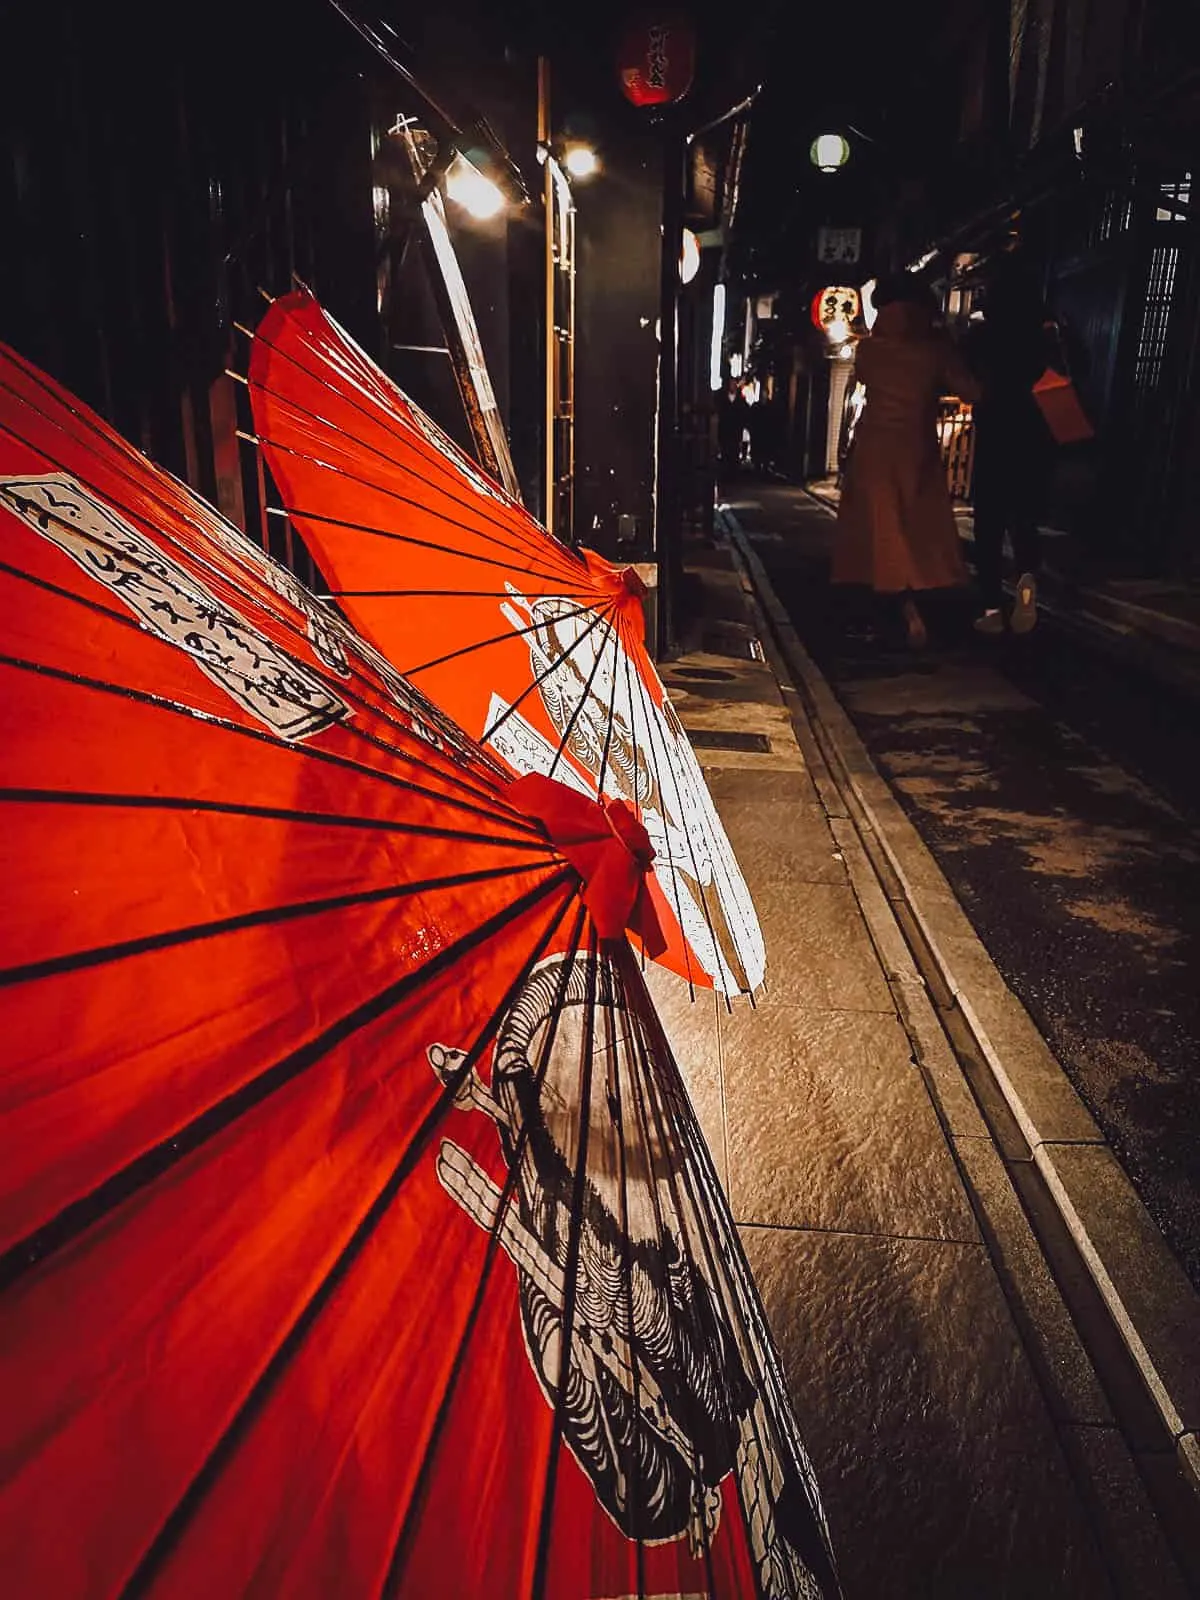 Traditional Japanese paper umbrellas